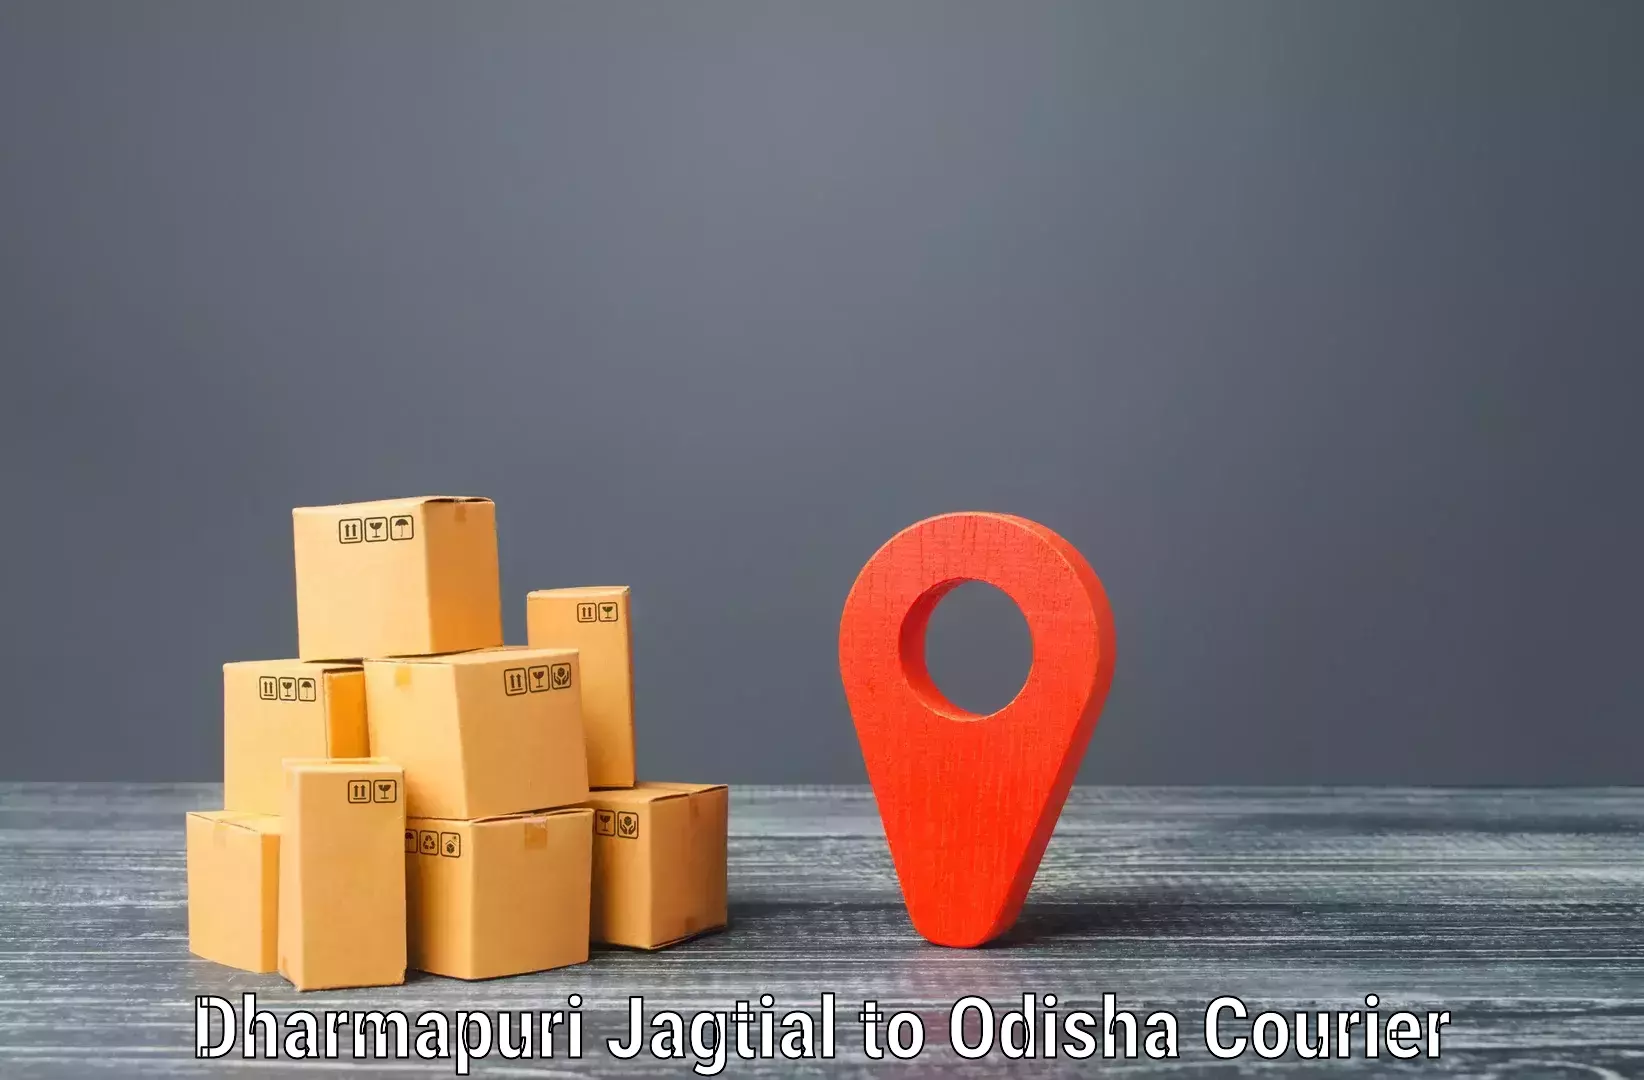 Seamless shipping service in Dharmapuri Jagtial to Muniguda